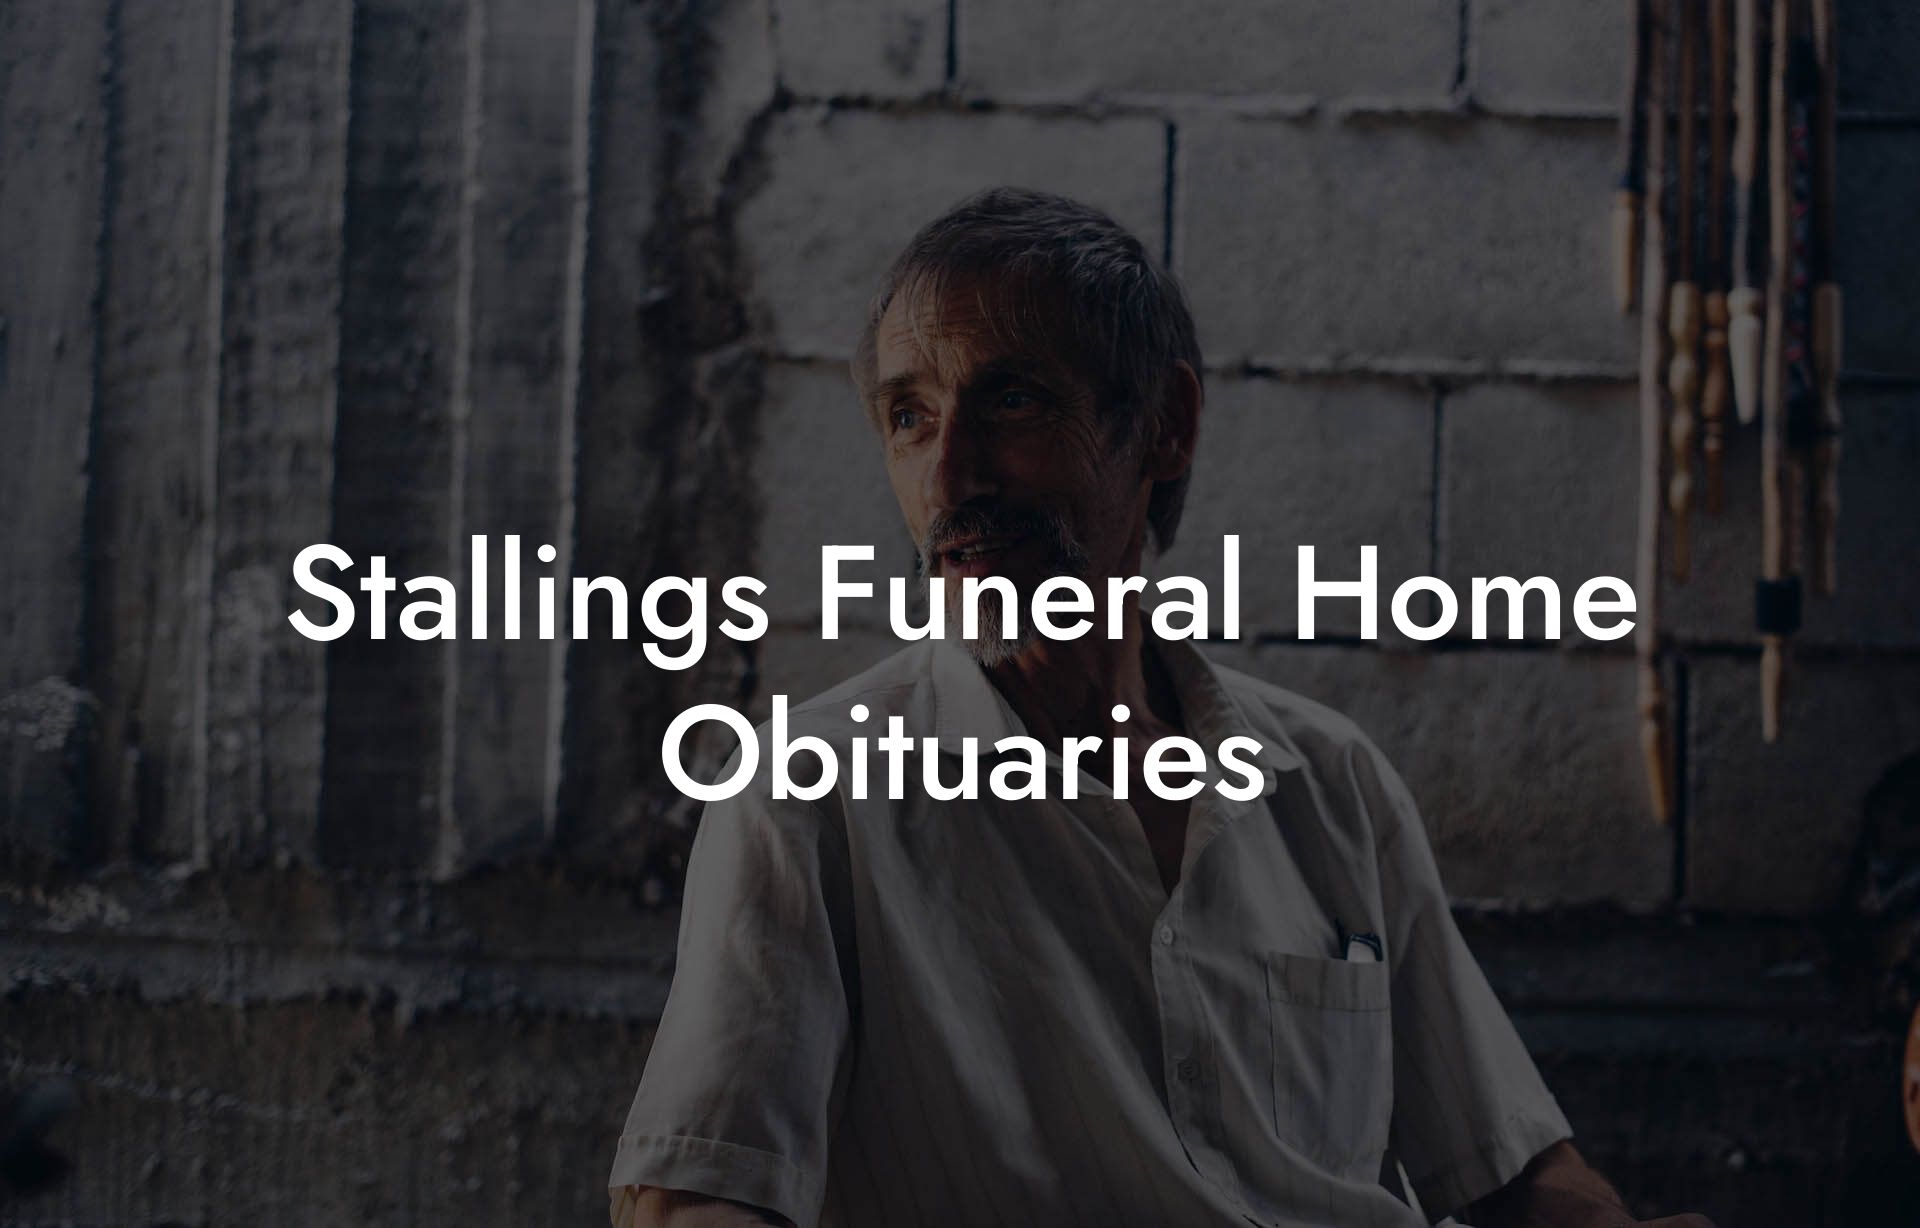 Stallings Funeral Home Obituaries